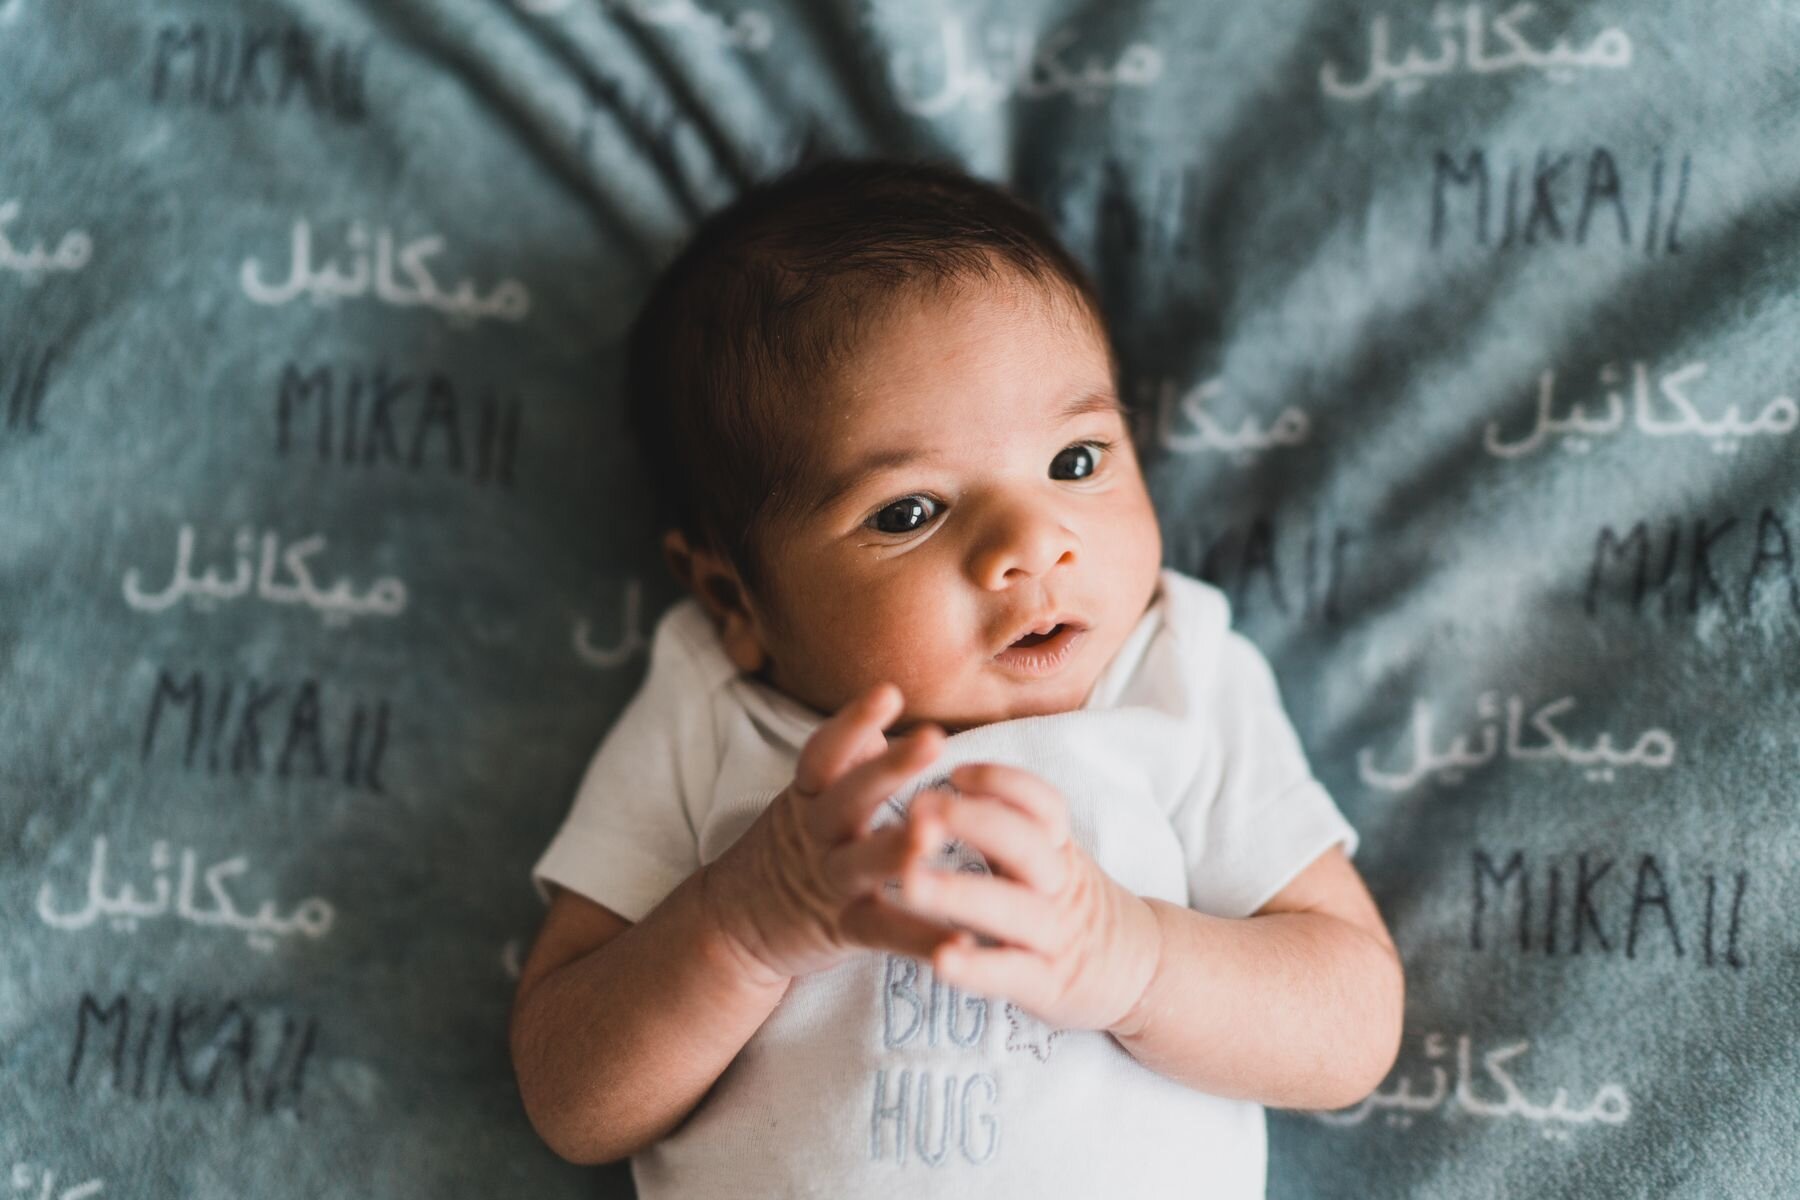 Issaquah newborn baby boy Mikail